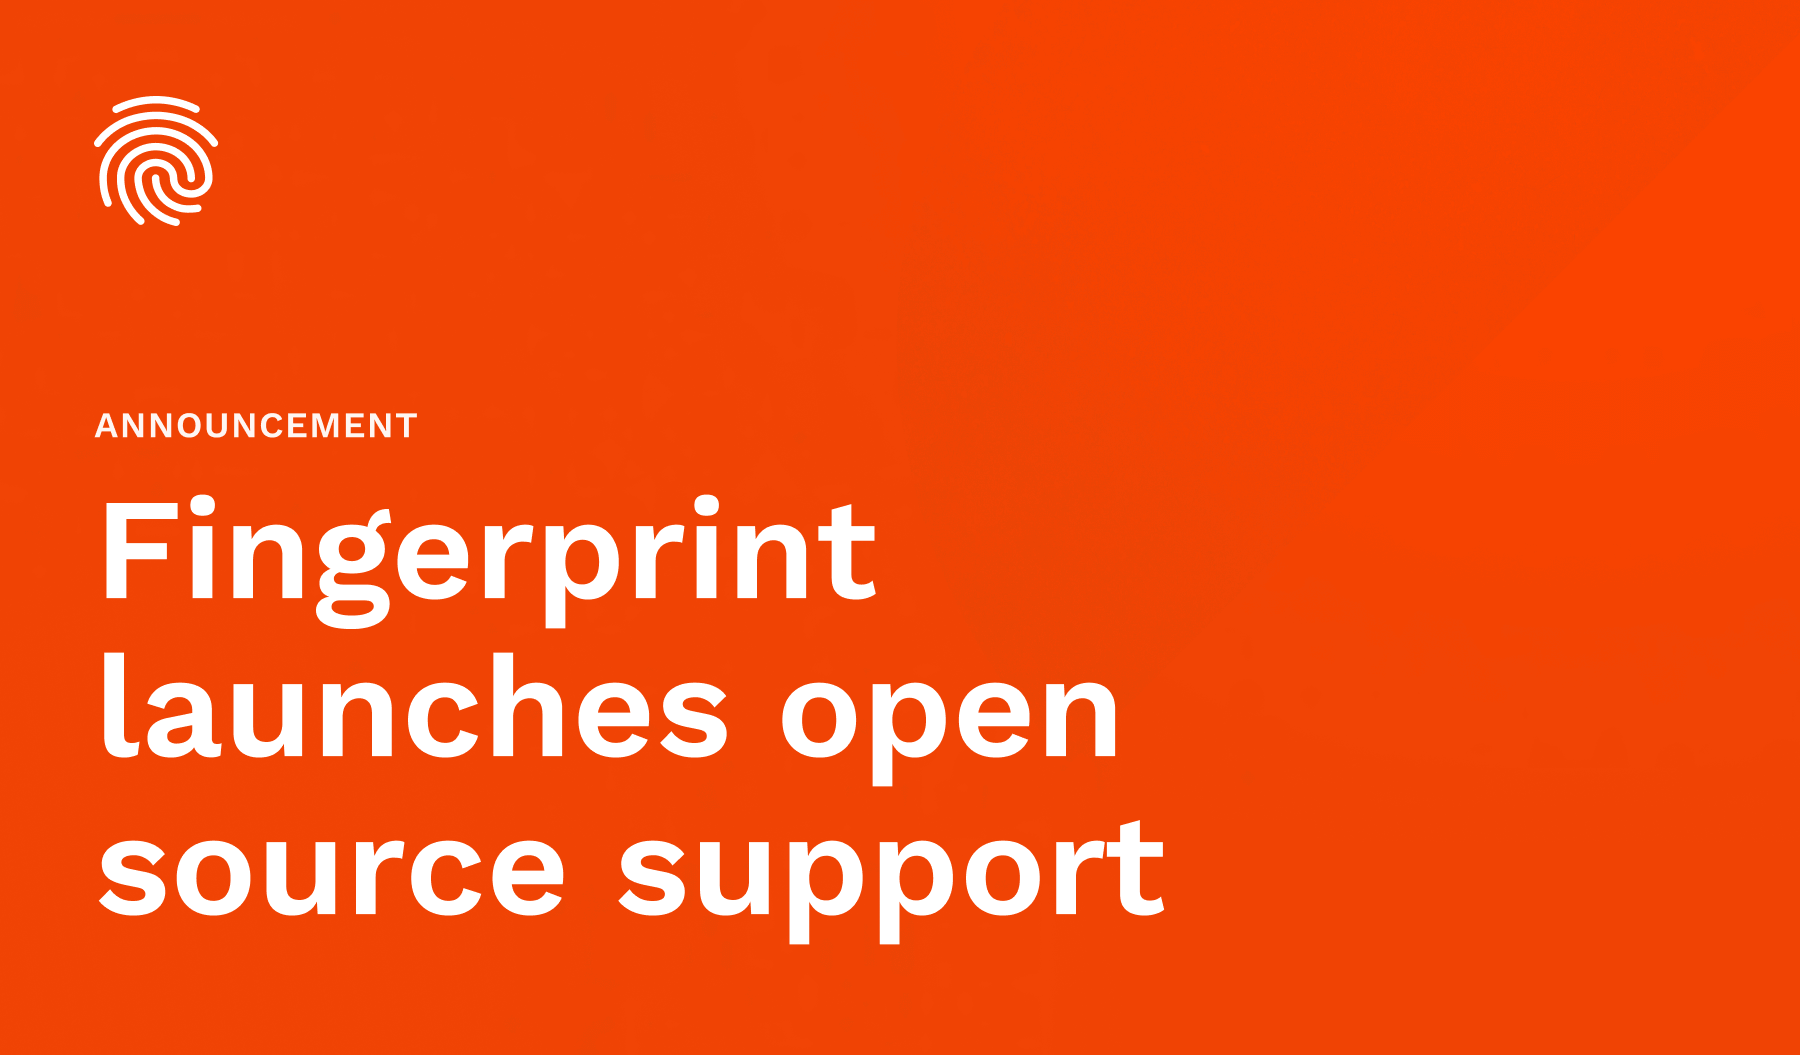 Fingerprint launches open source support